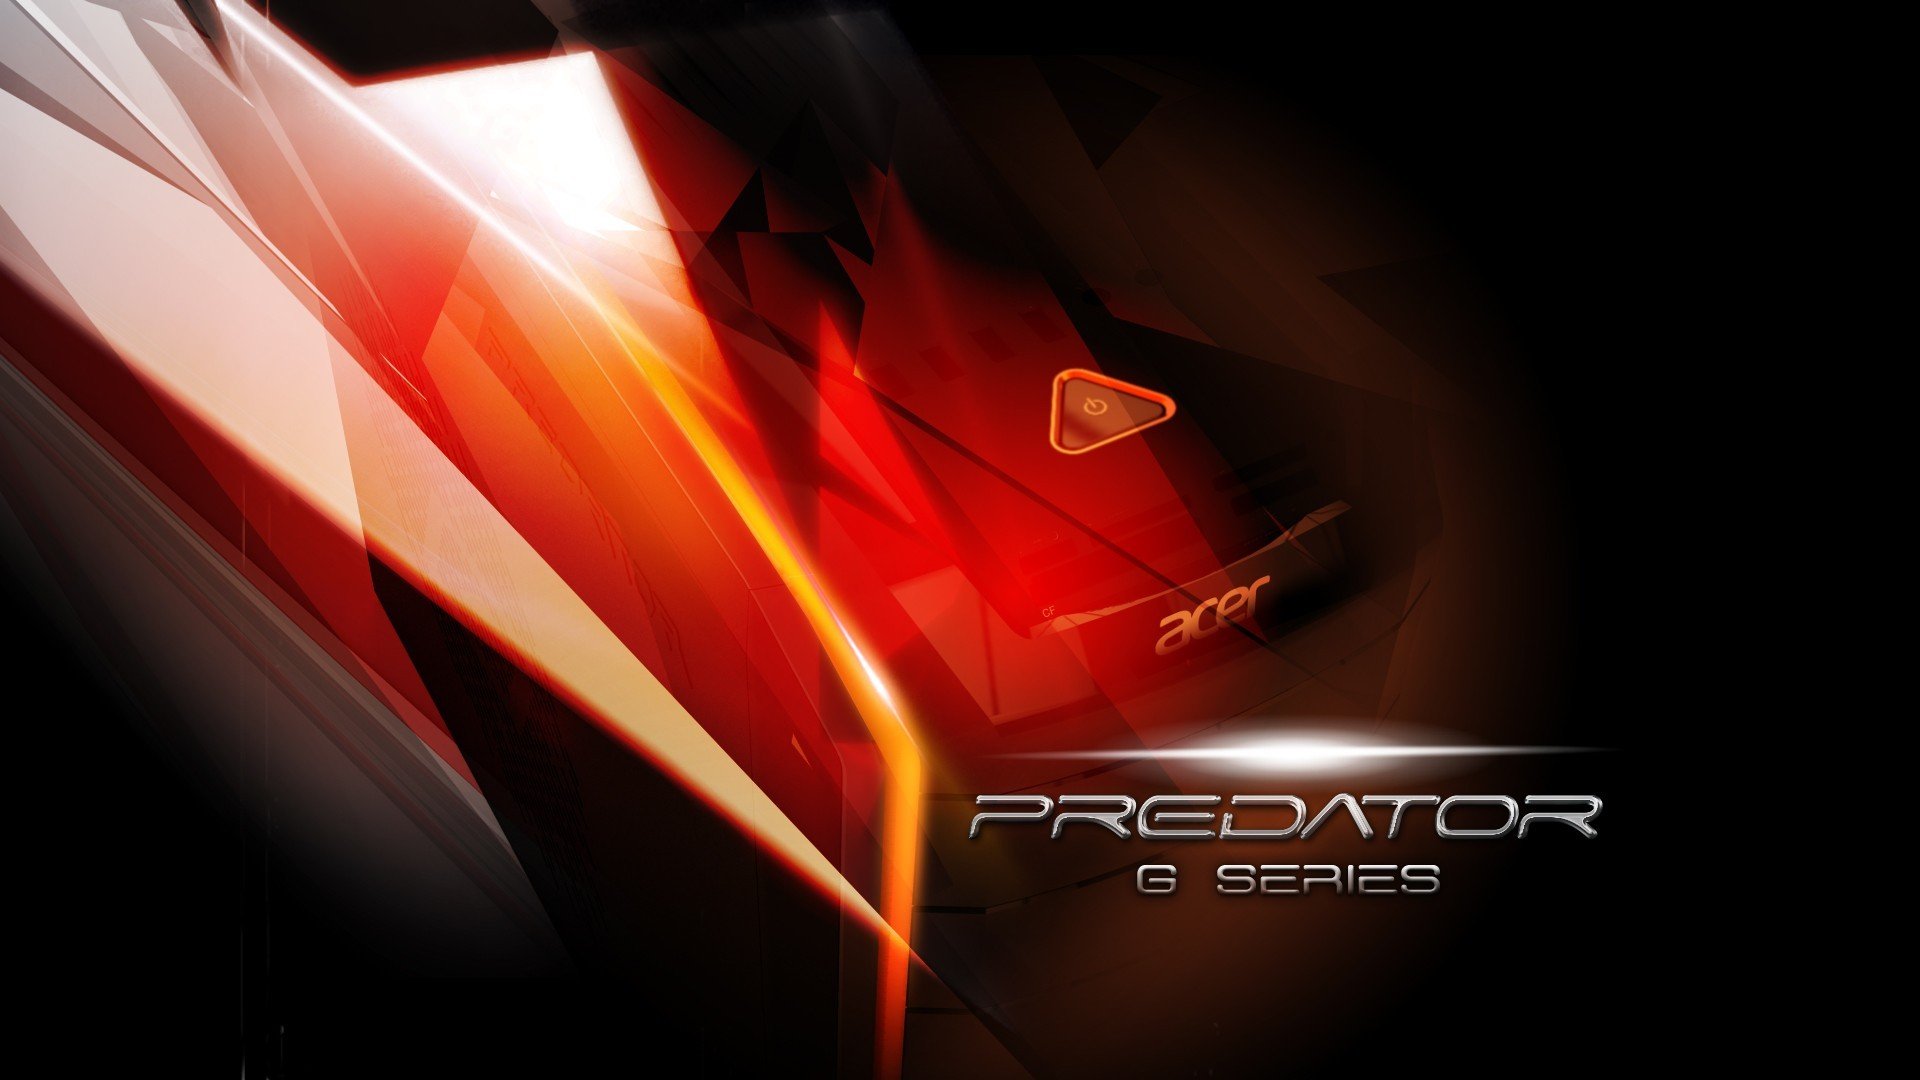 Acer Aspire Predator Gaming Desktop Puter Wallpaper Background